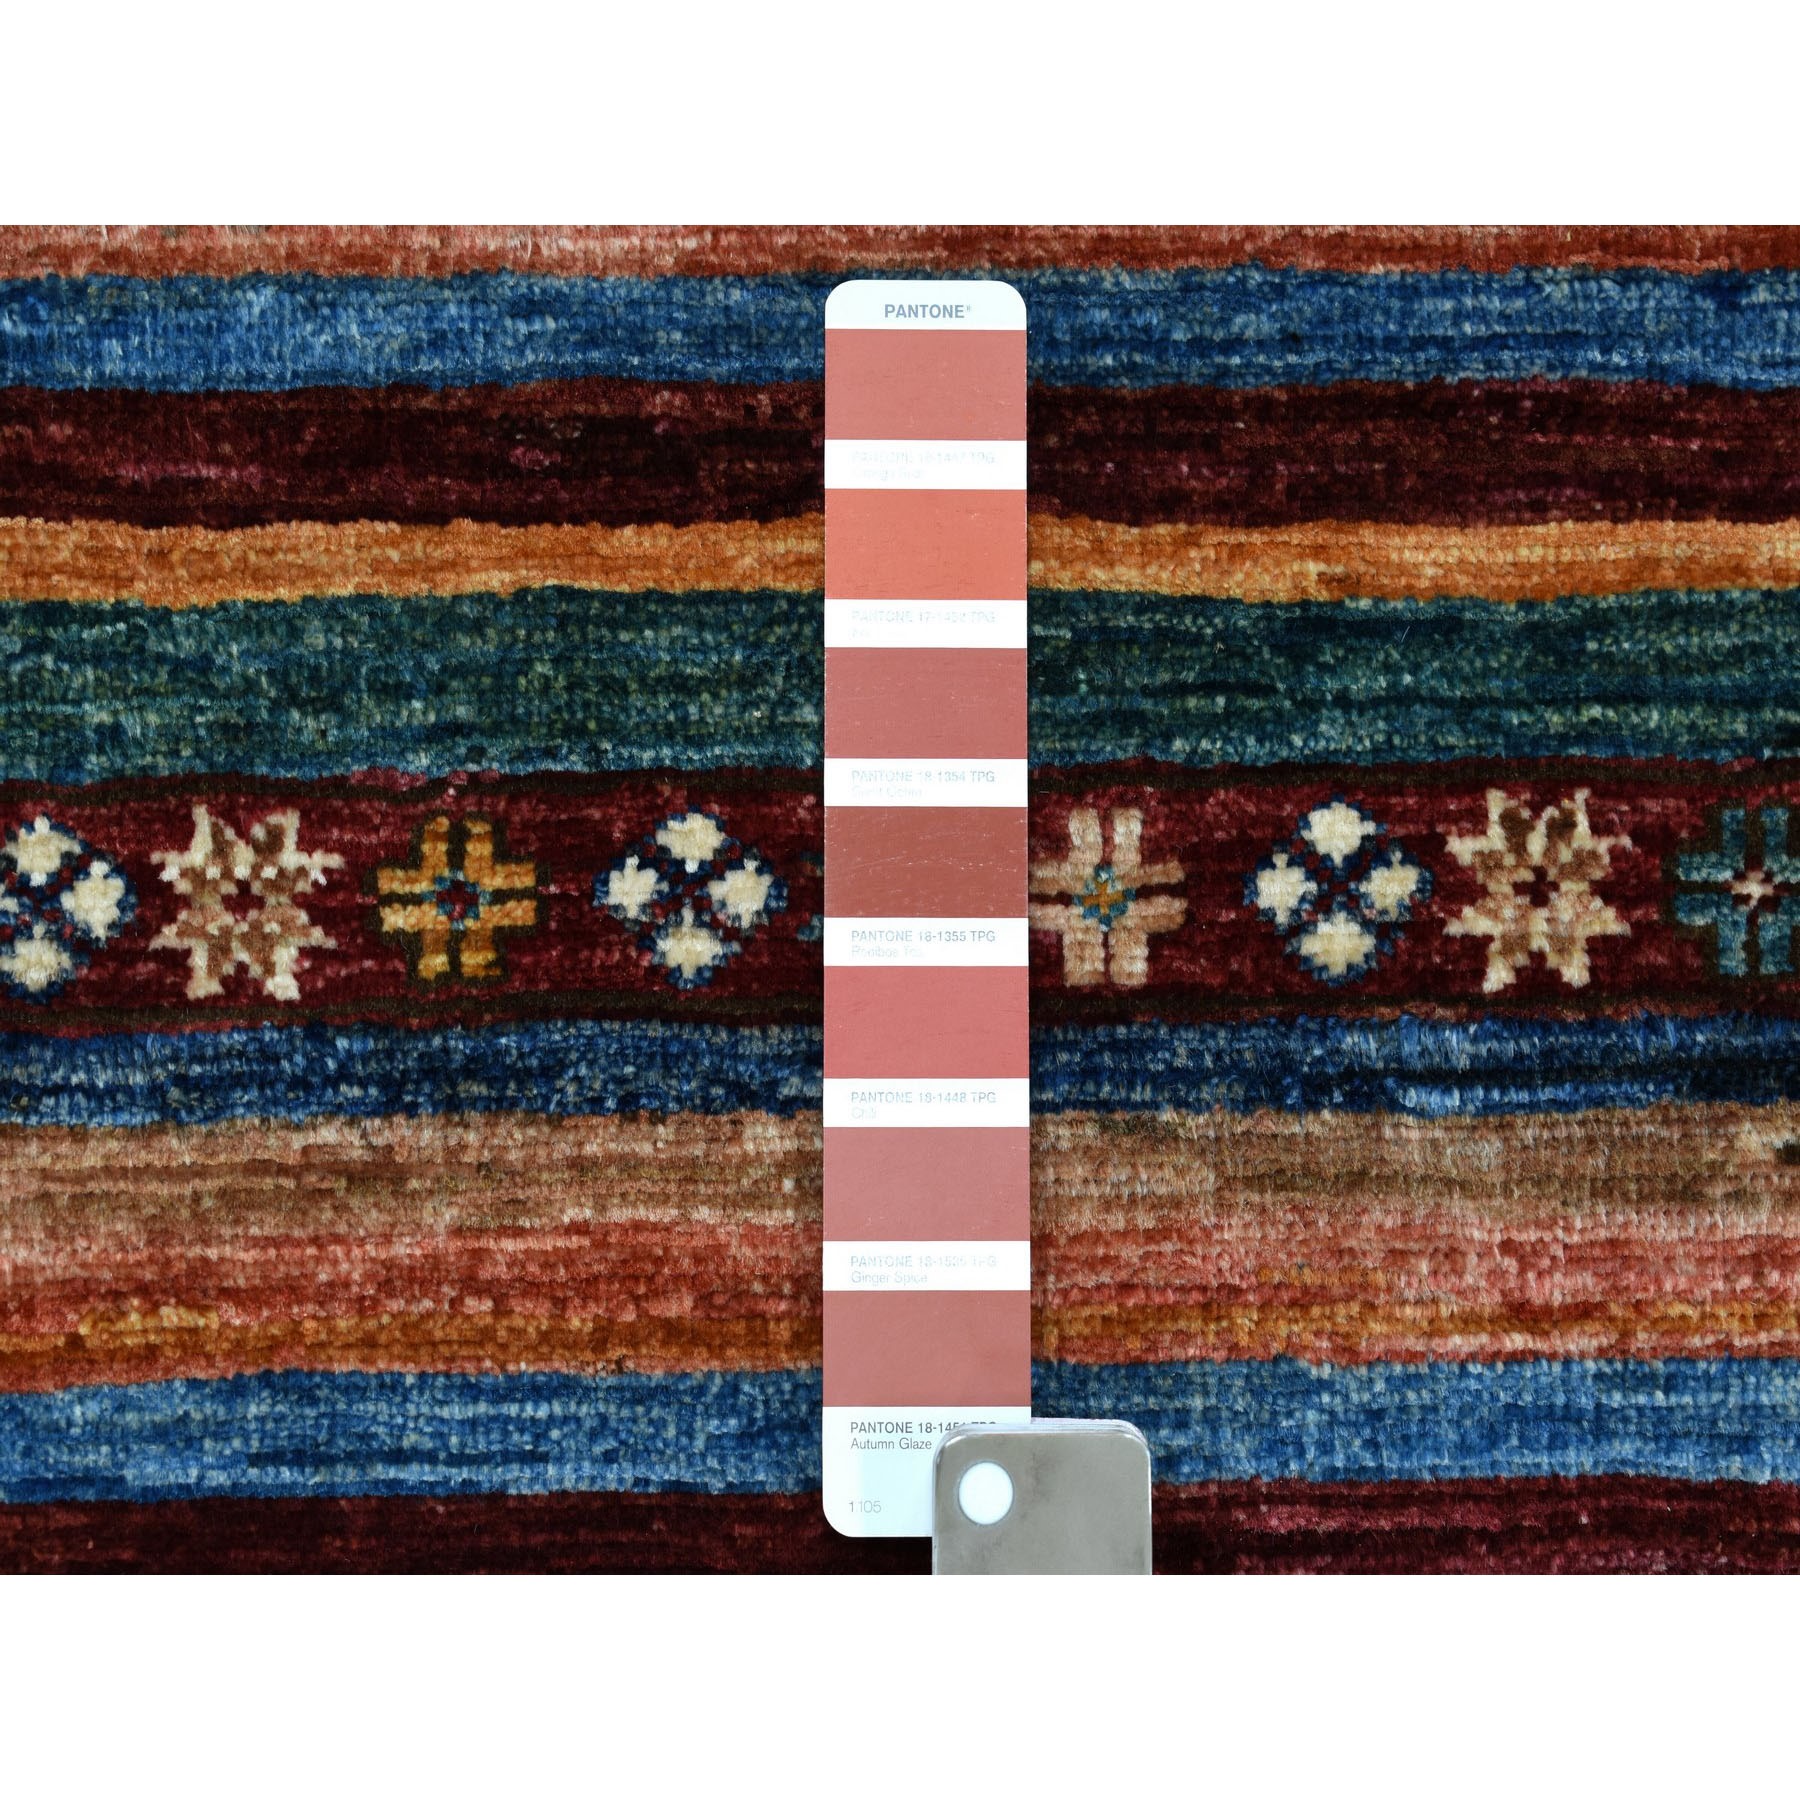 2-9 x8-2  Red Khorjin Design Runner Super Kazak Geometric Pure Wool Hand Knotted Oriental Rug 